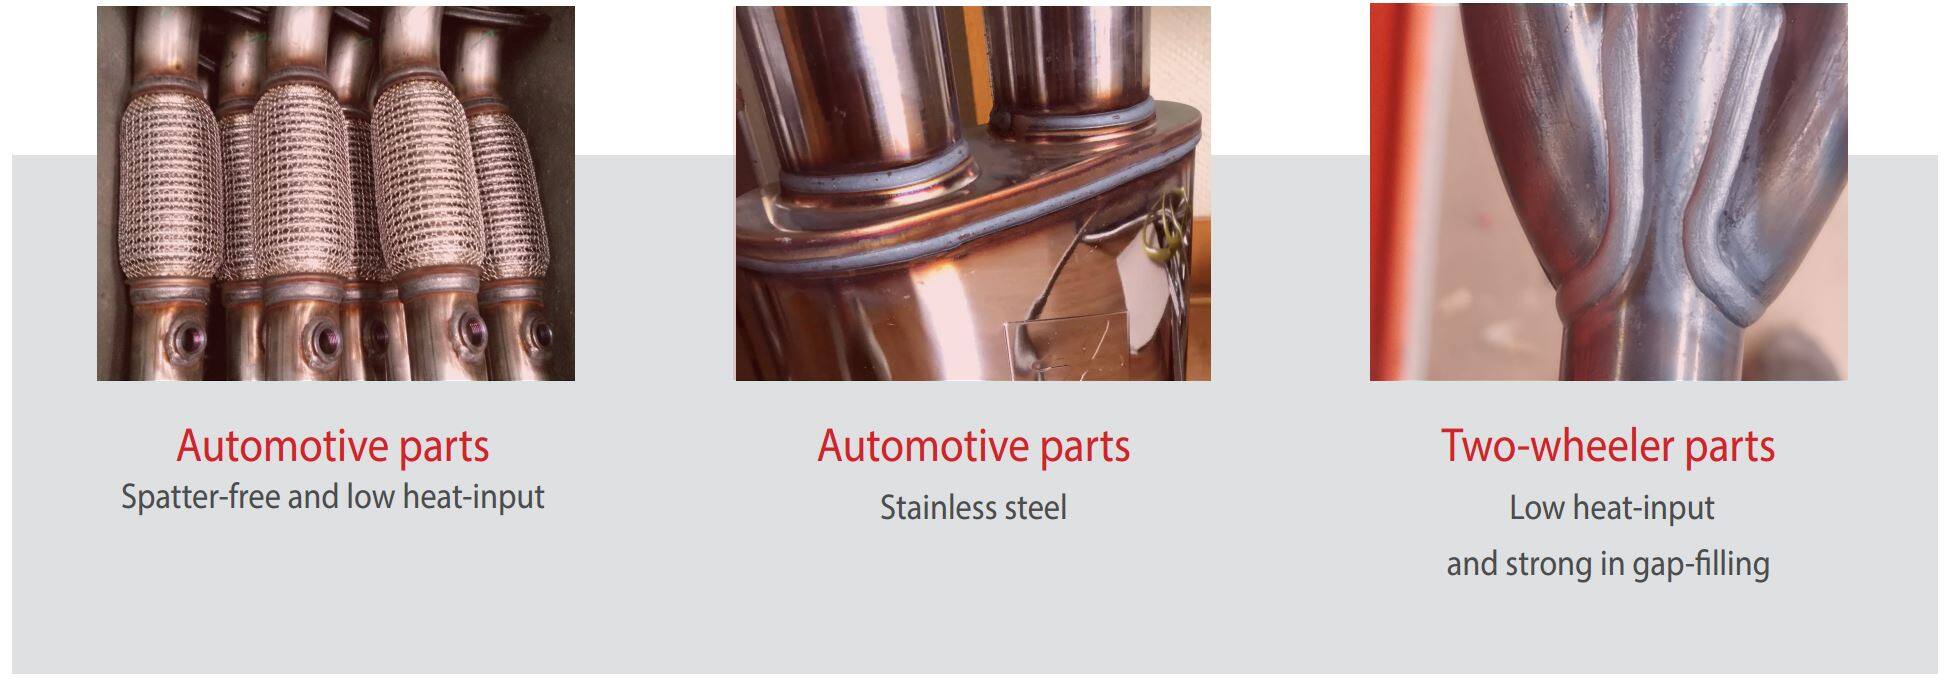 Artsen plus welder - Tranquil Fusion in automotive welding